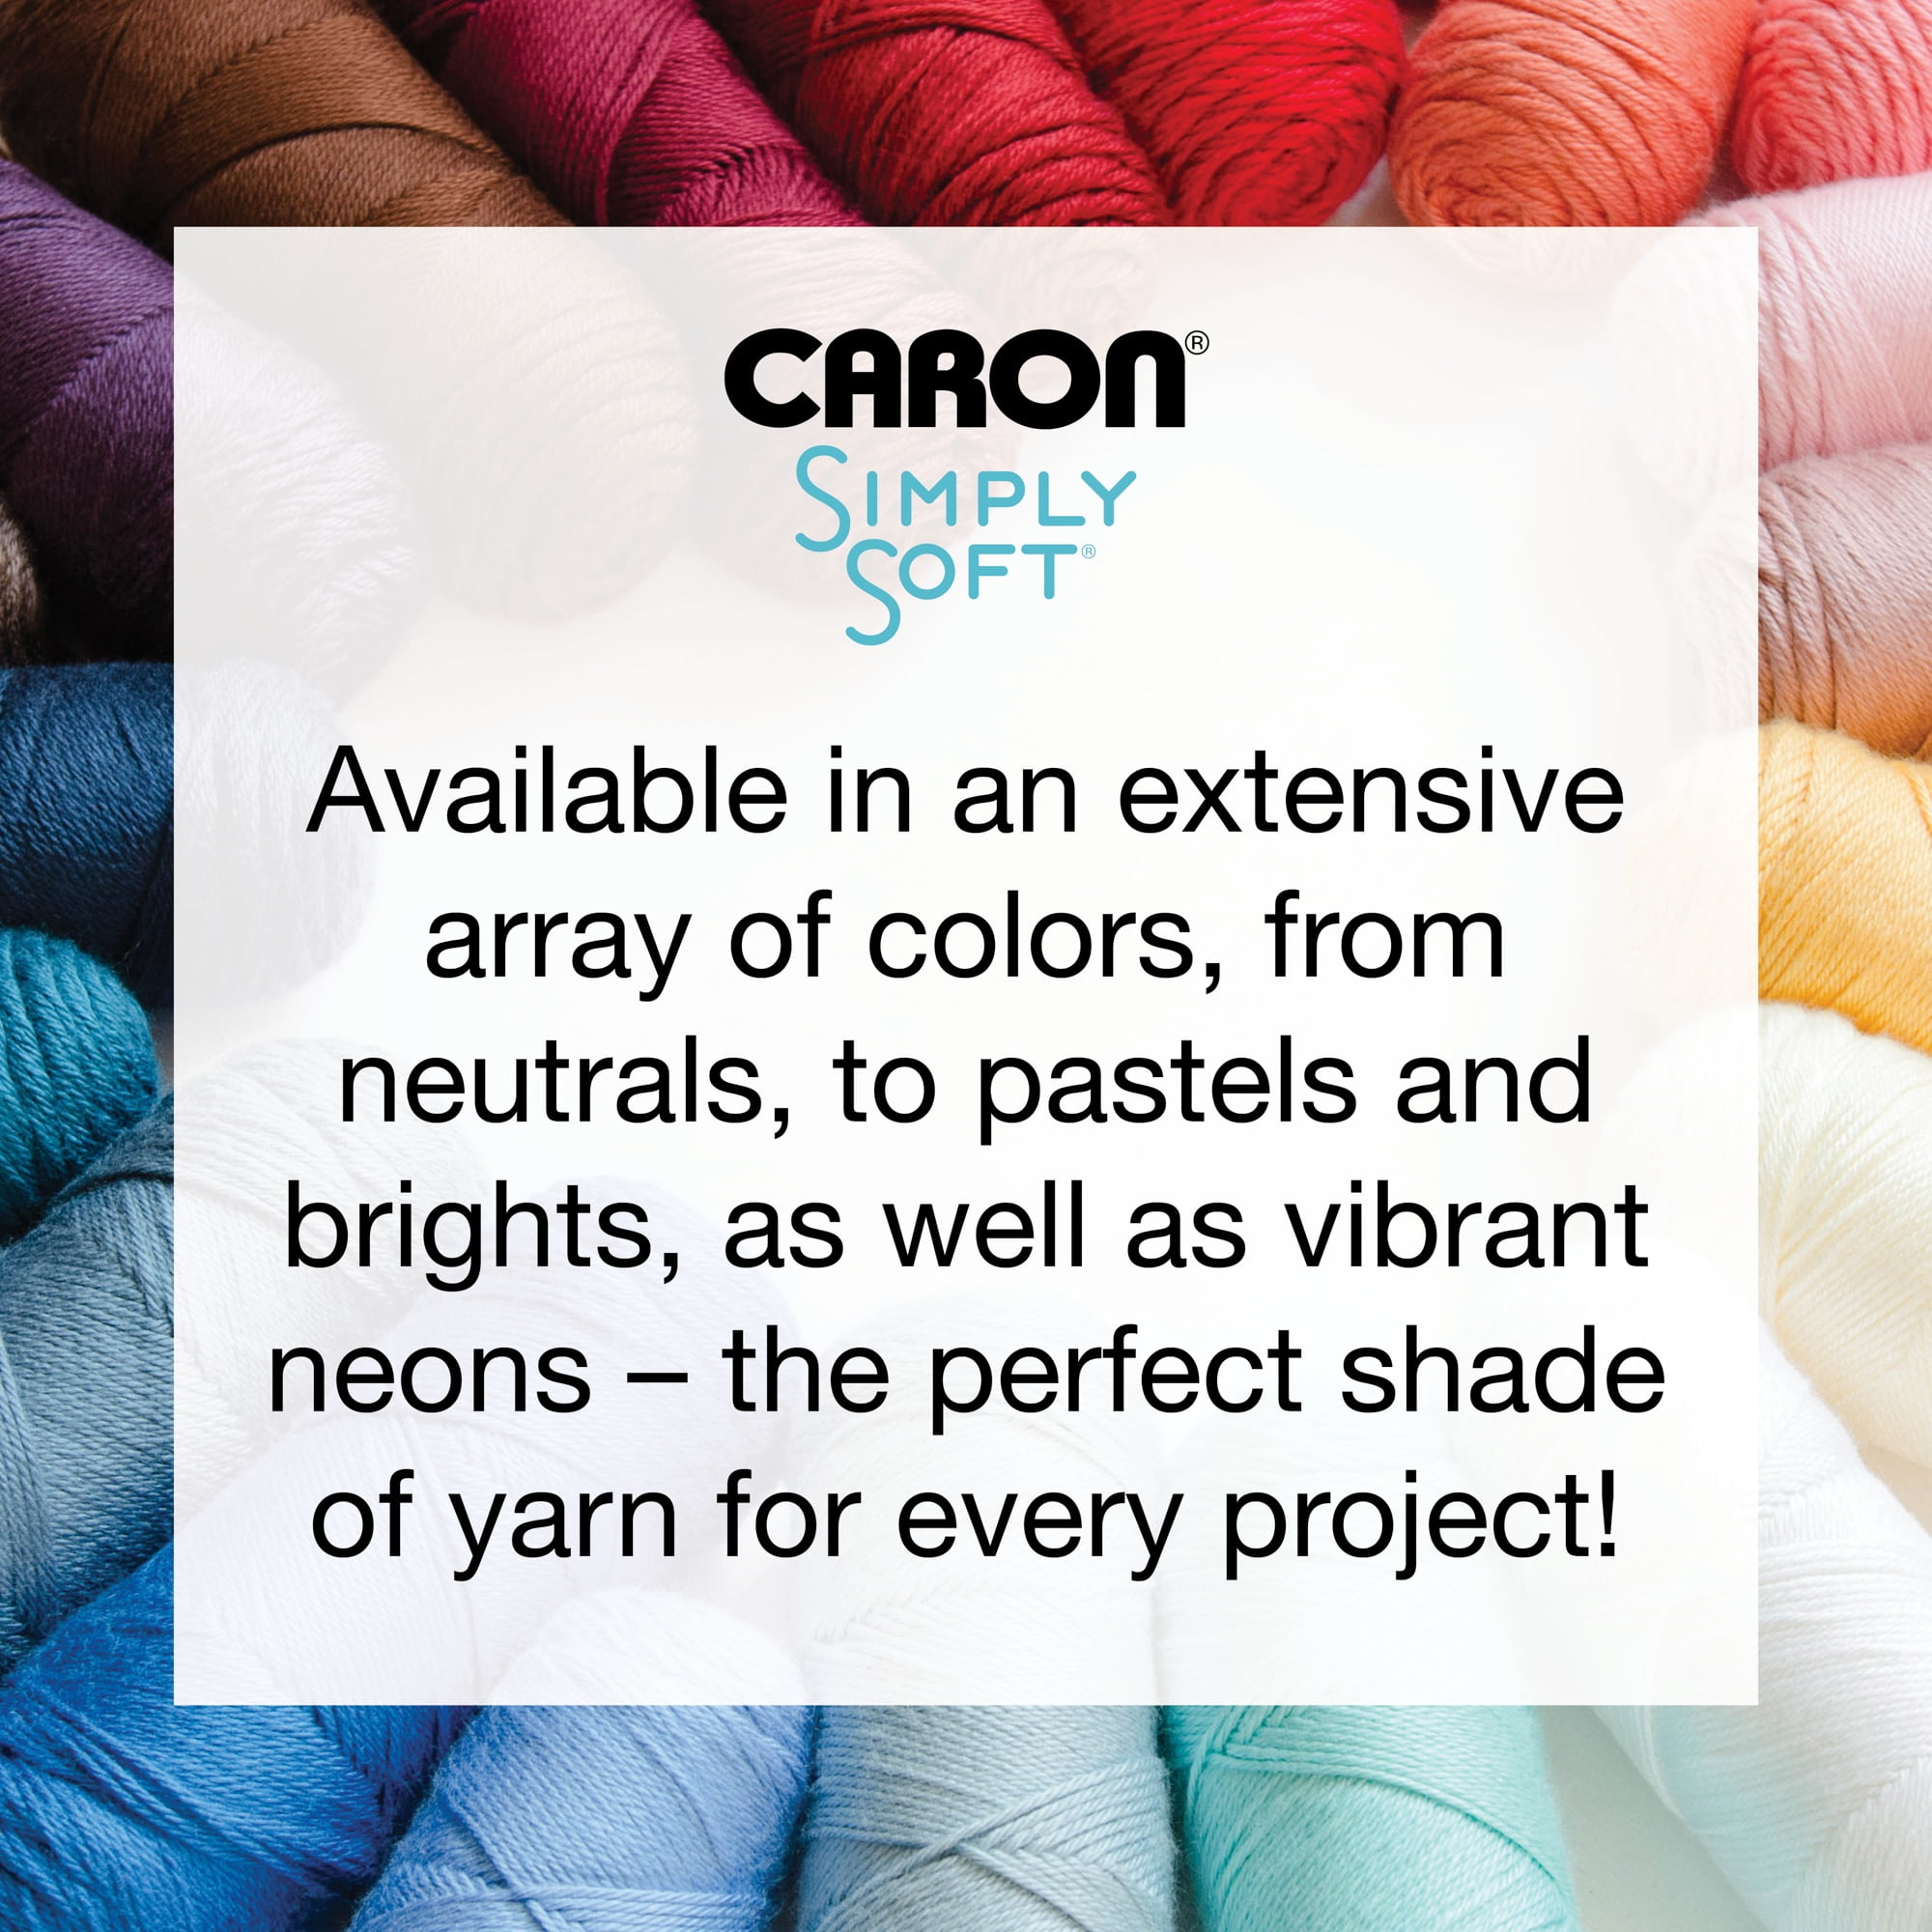 Caron Simply Soft Soft Pink Yarn - 3 Pack of 170g/6oz - Acrylic - 4 Medium (Worsted) - 315 Yards - Knitting, Crocheting & Crafts